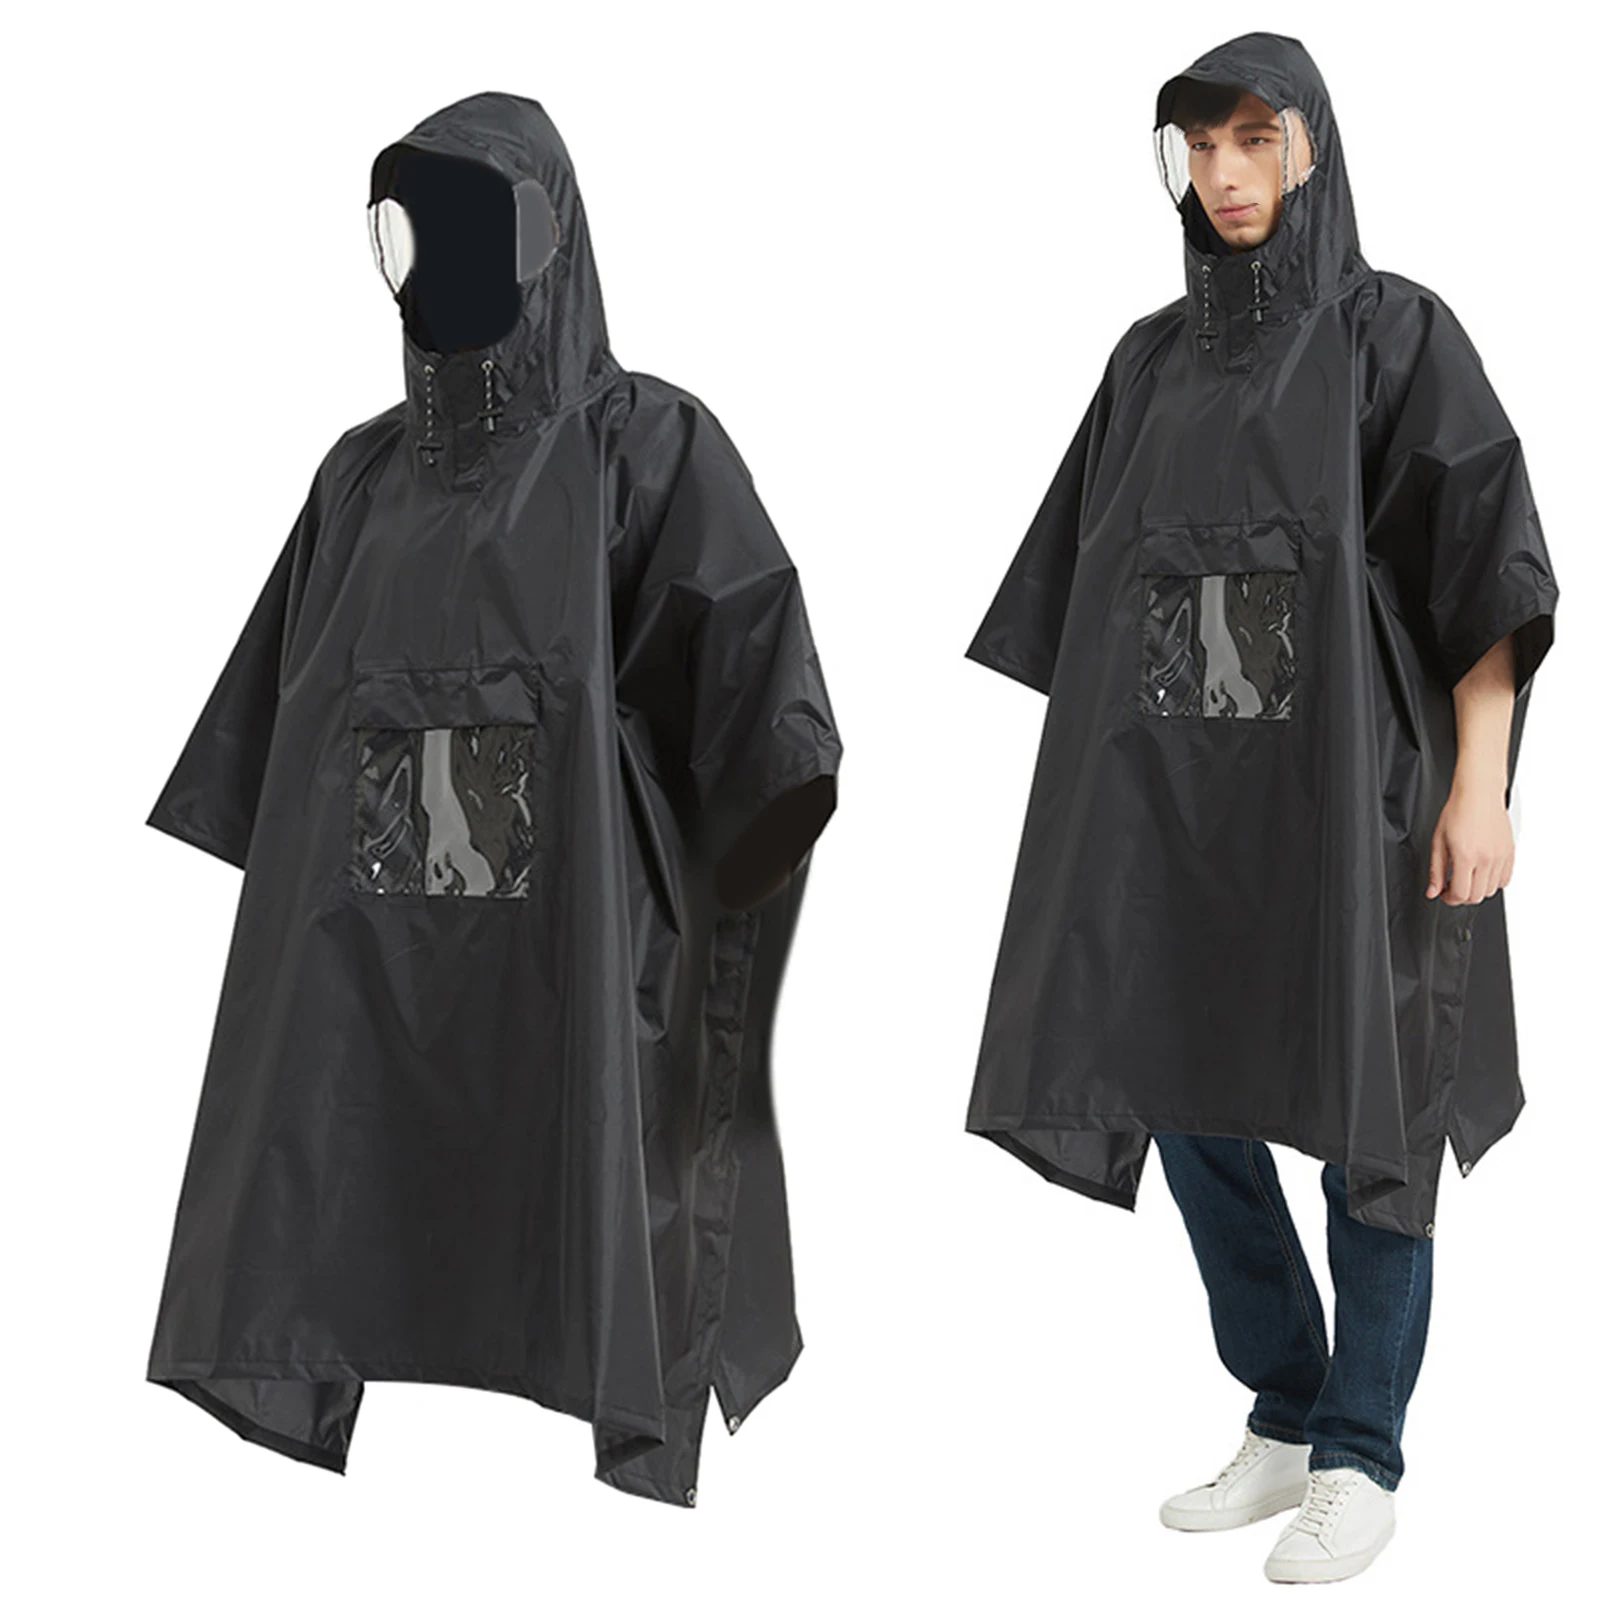 Waterproof Rain Poncho Rain Cape Survival Gear Reusable Coat Jacket Outdoor Activities Raincoat Tent Mat Tarp Travel Rainwear